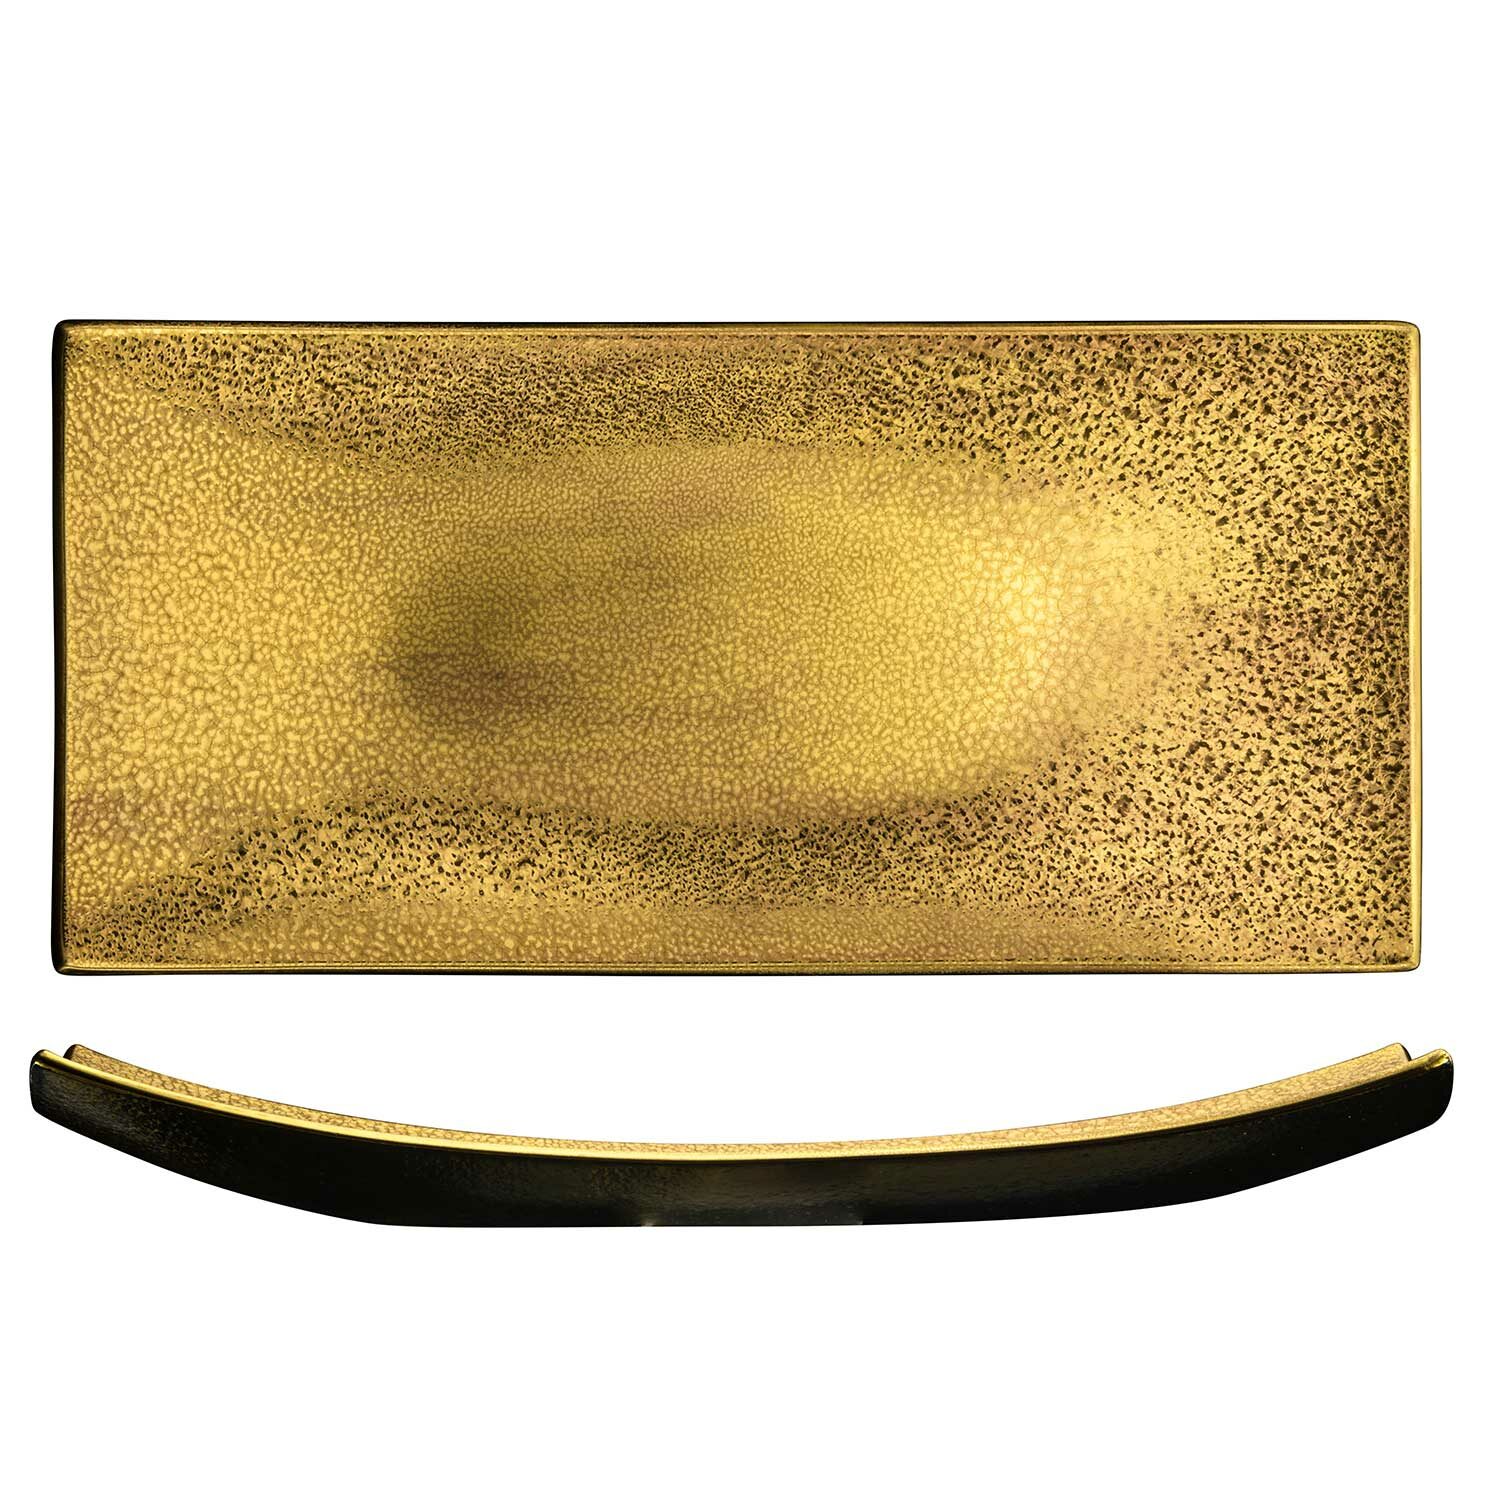 GOLD RUSH Gold Platte medium